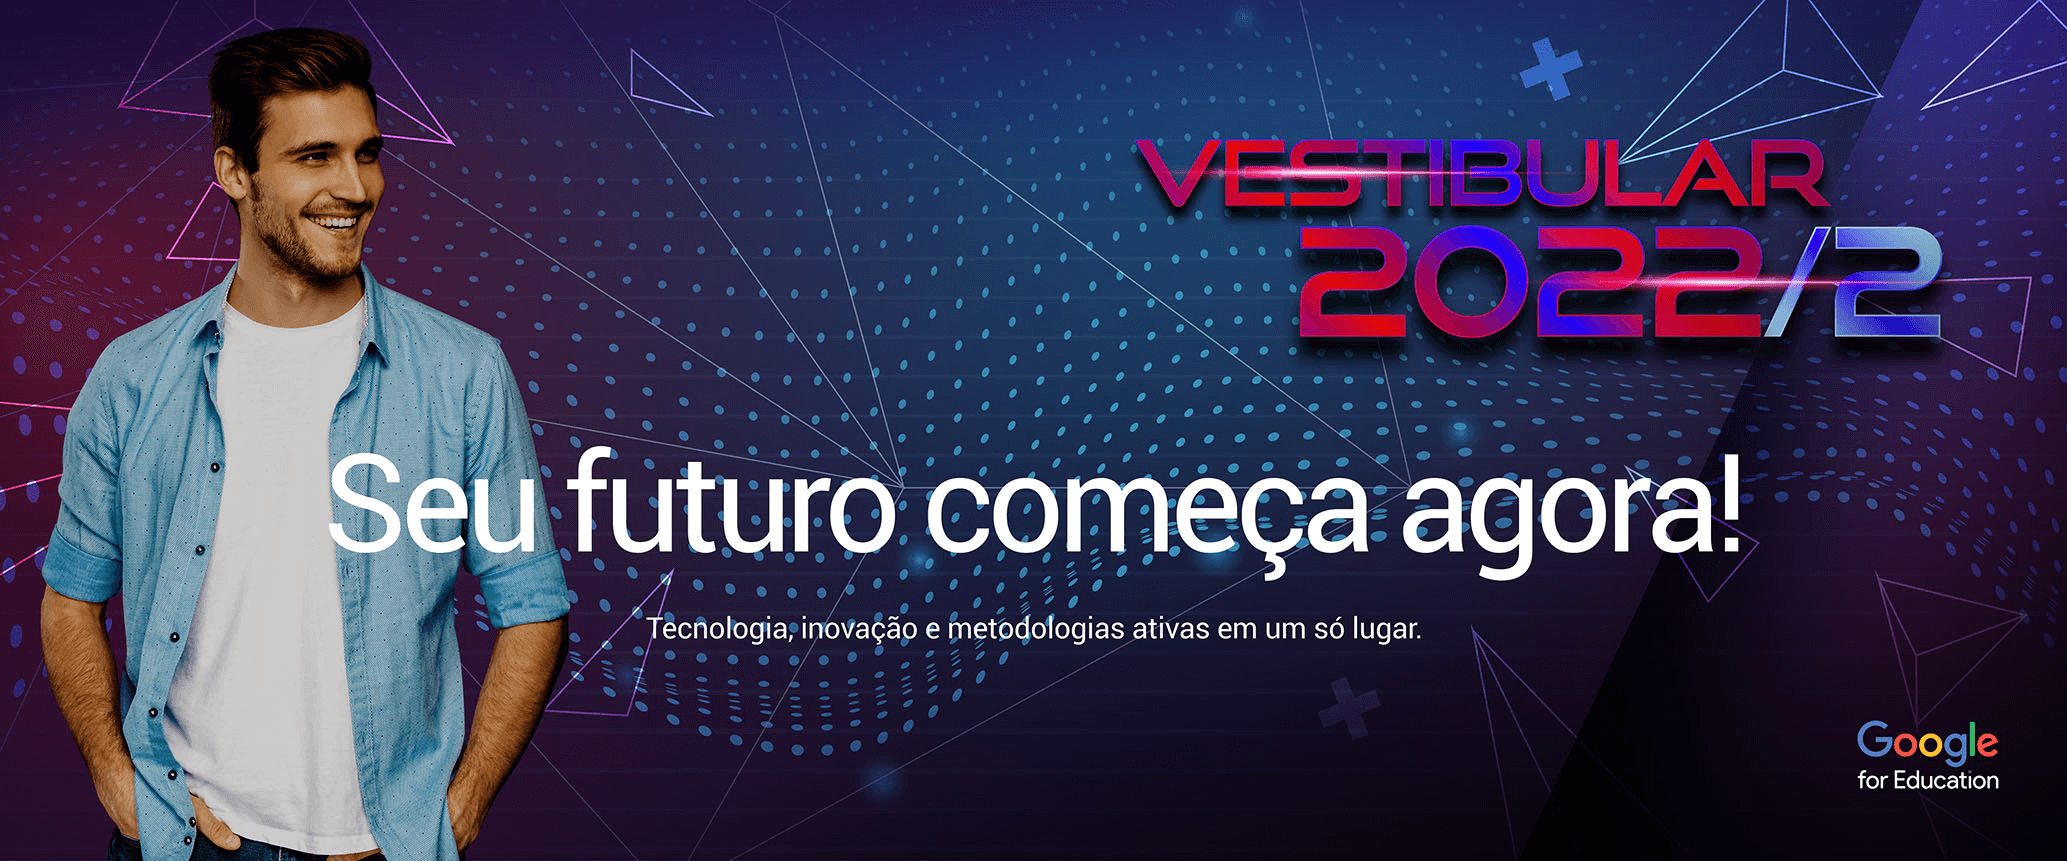 Vestibular-2022_slide_home_